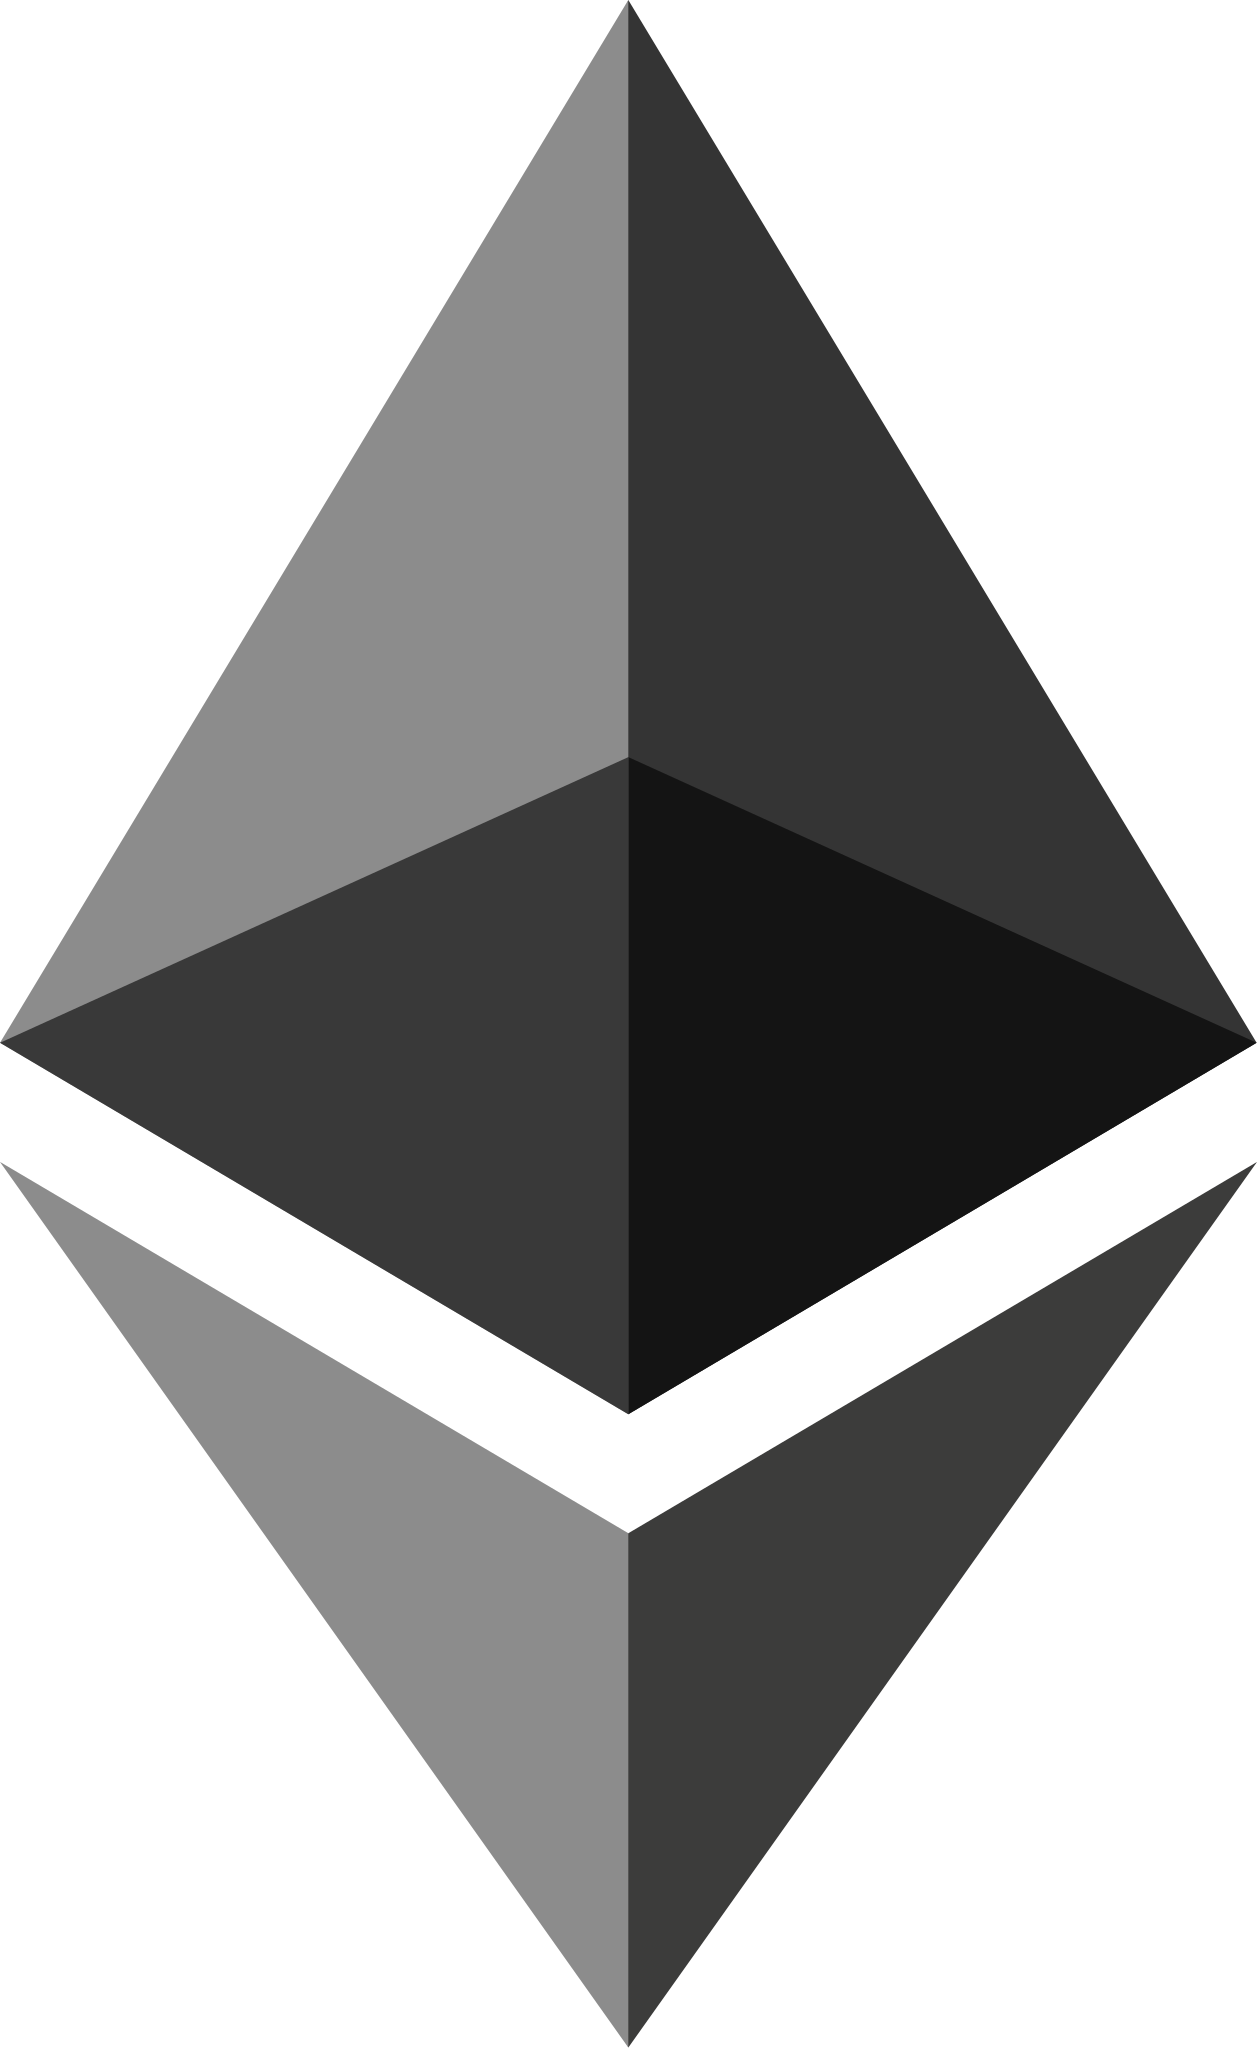 File:Ethereum logo 2014.svg - Wikimedia Commons